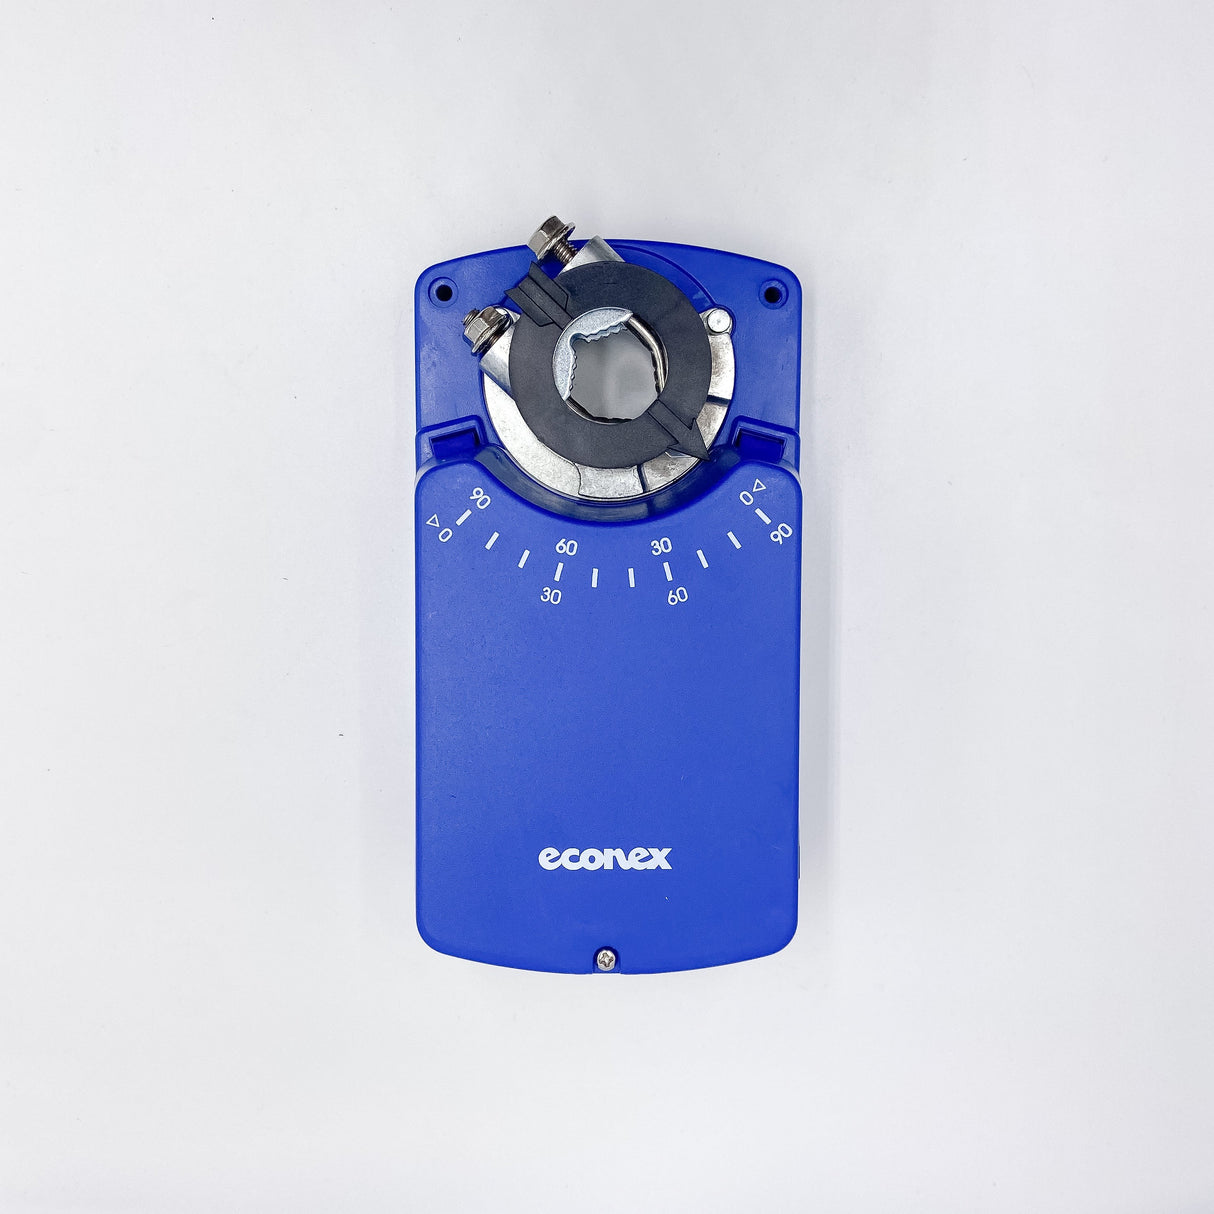 Econex AG8A2002-SE2 伺服电机 - 4-20A